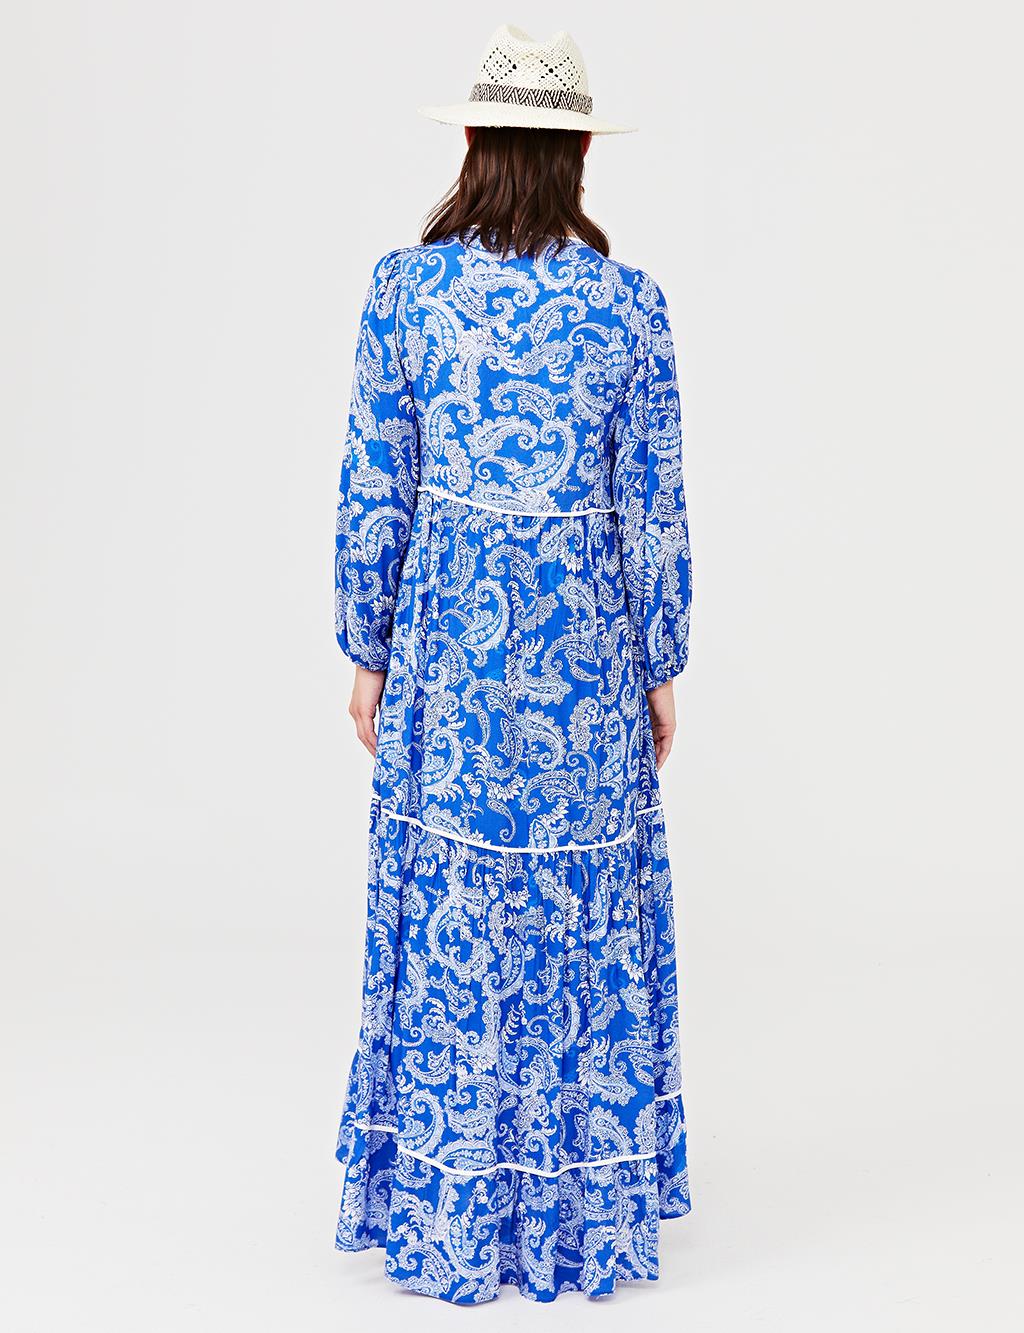 Ethnic Patterned Ruffle Dress B21 23157 Blue